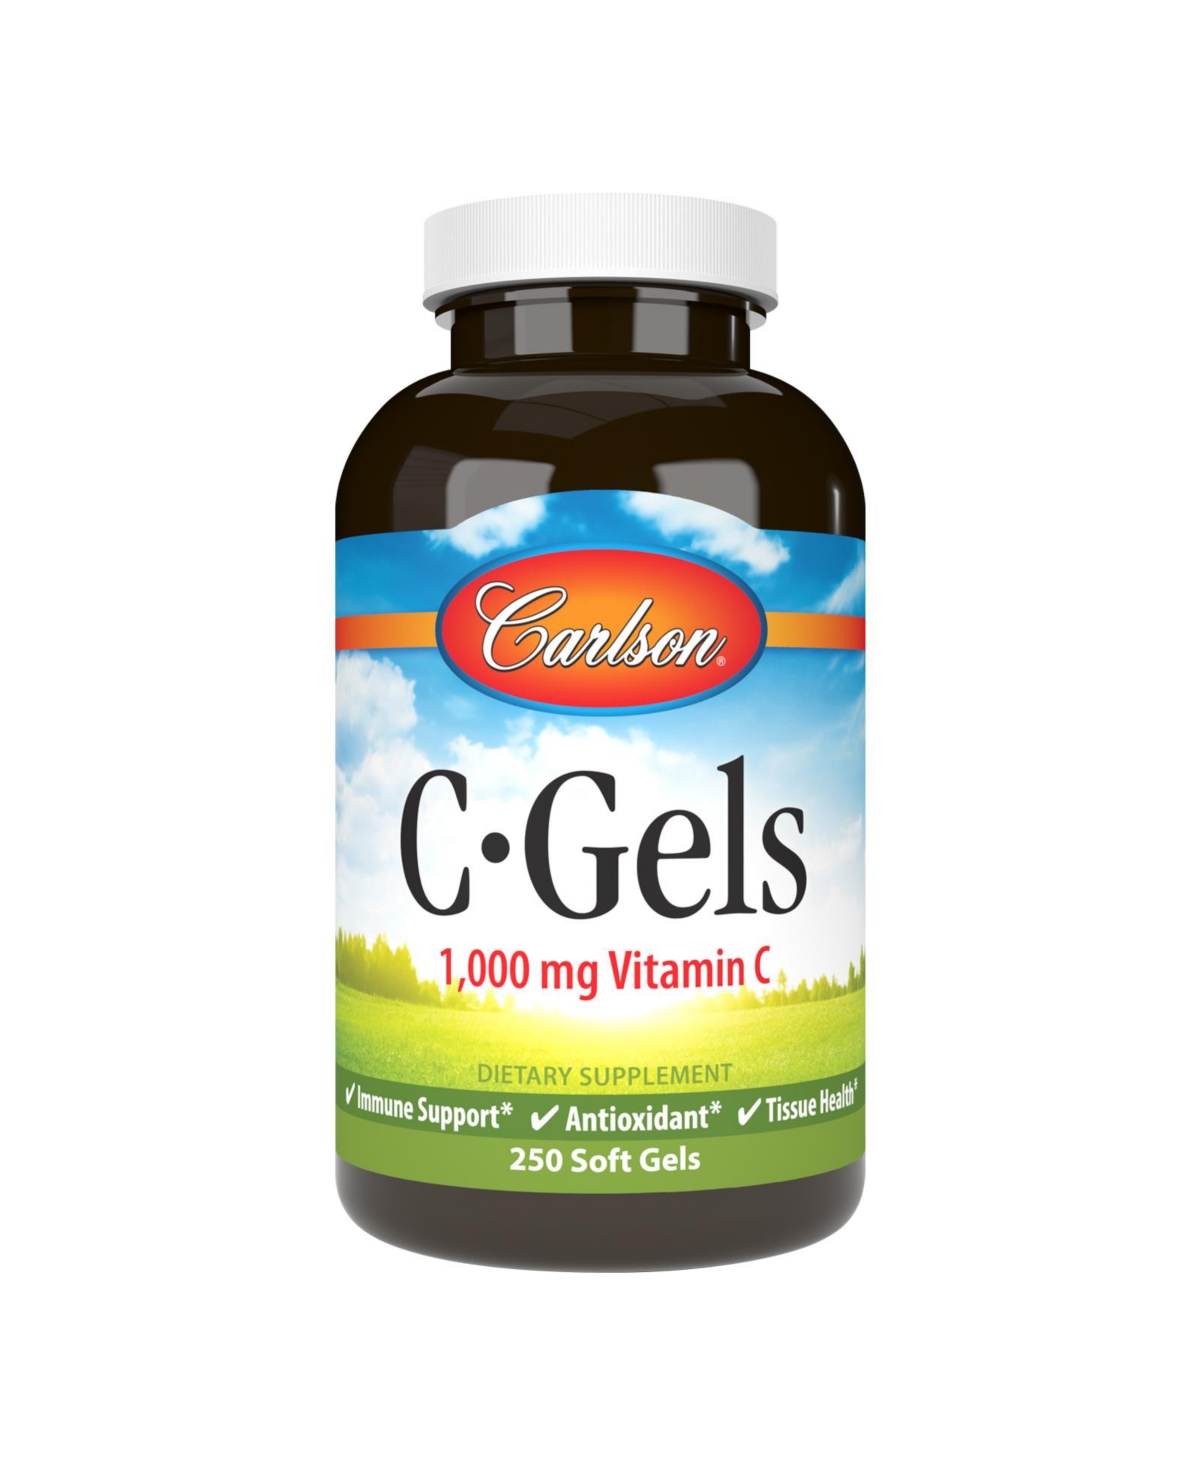 Carlson - C-Gels, 1000 mg, Vitamin C Softgels, Immune Support, Antioxidant, 250 Softgels - Assorted Pre-Pack